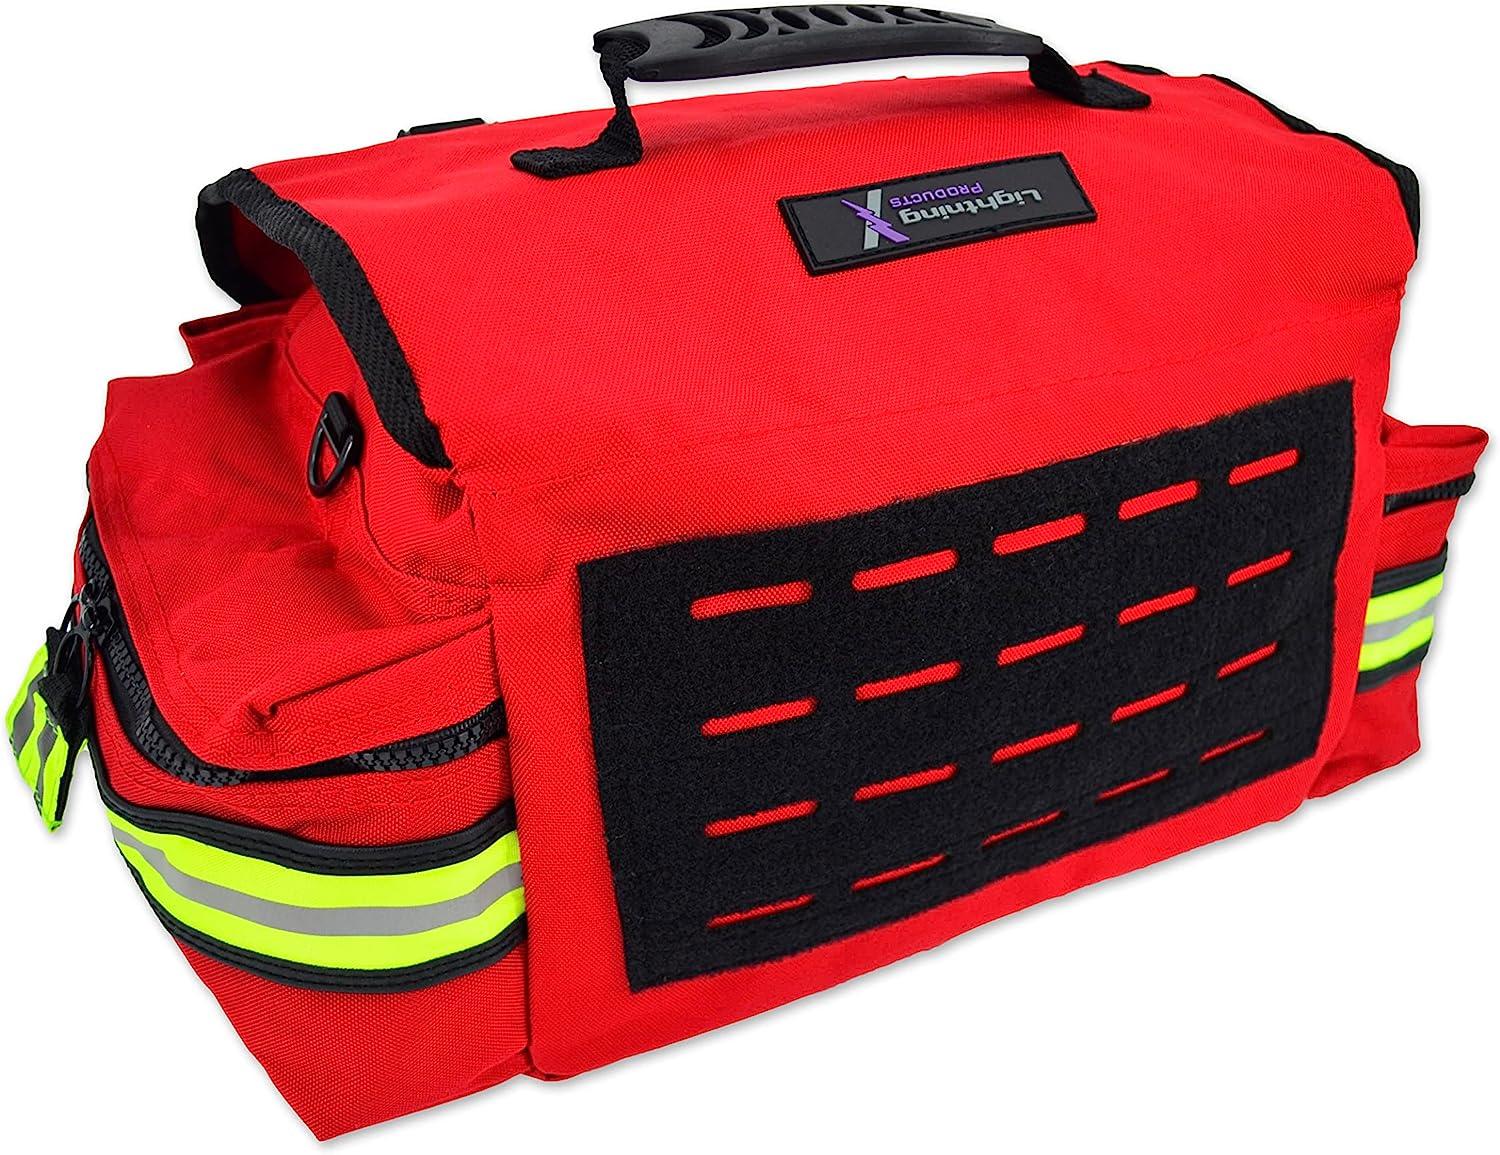 Pouches Bags for Ambulance Paramedic Emergency First Aid, 38cm x 24cm x 6cm